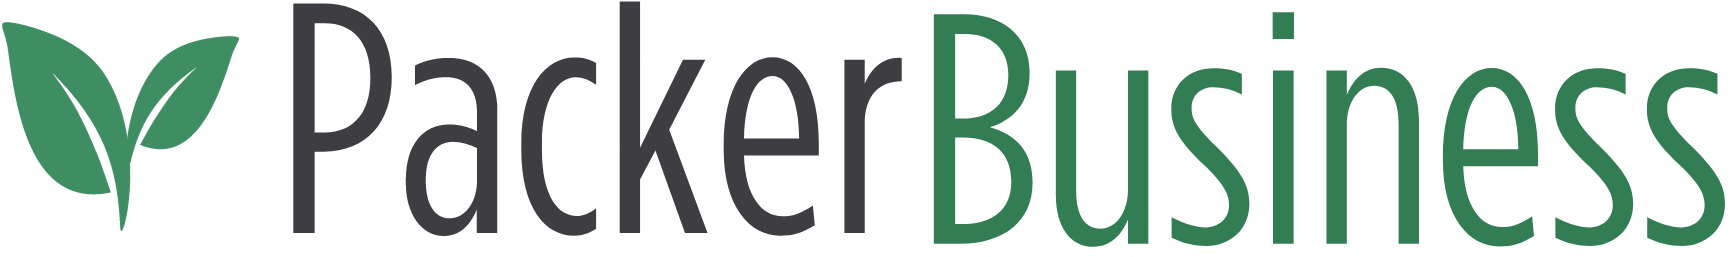 packer business logo